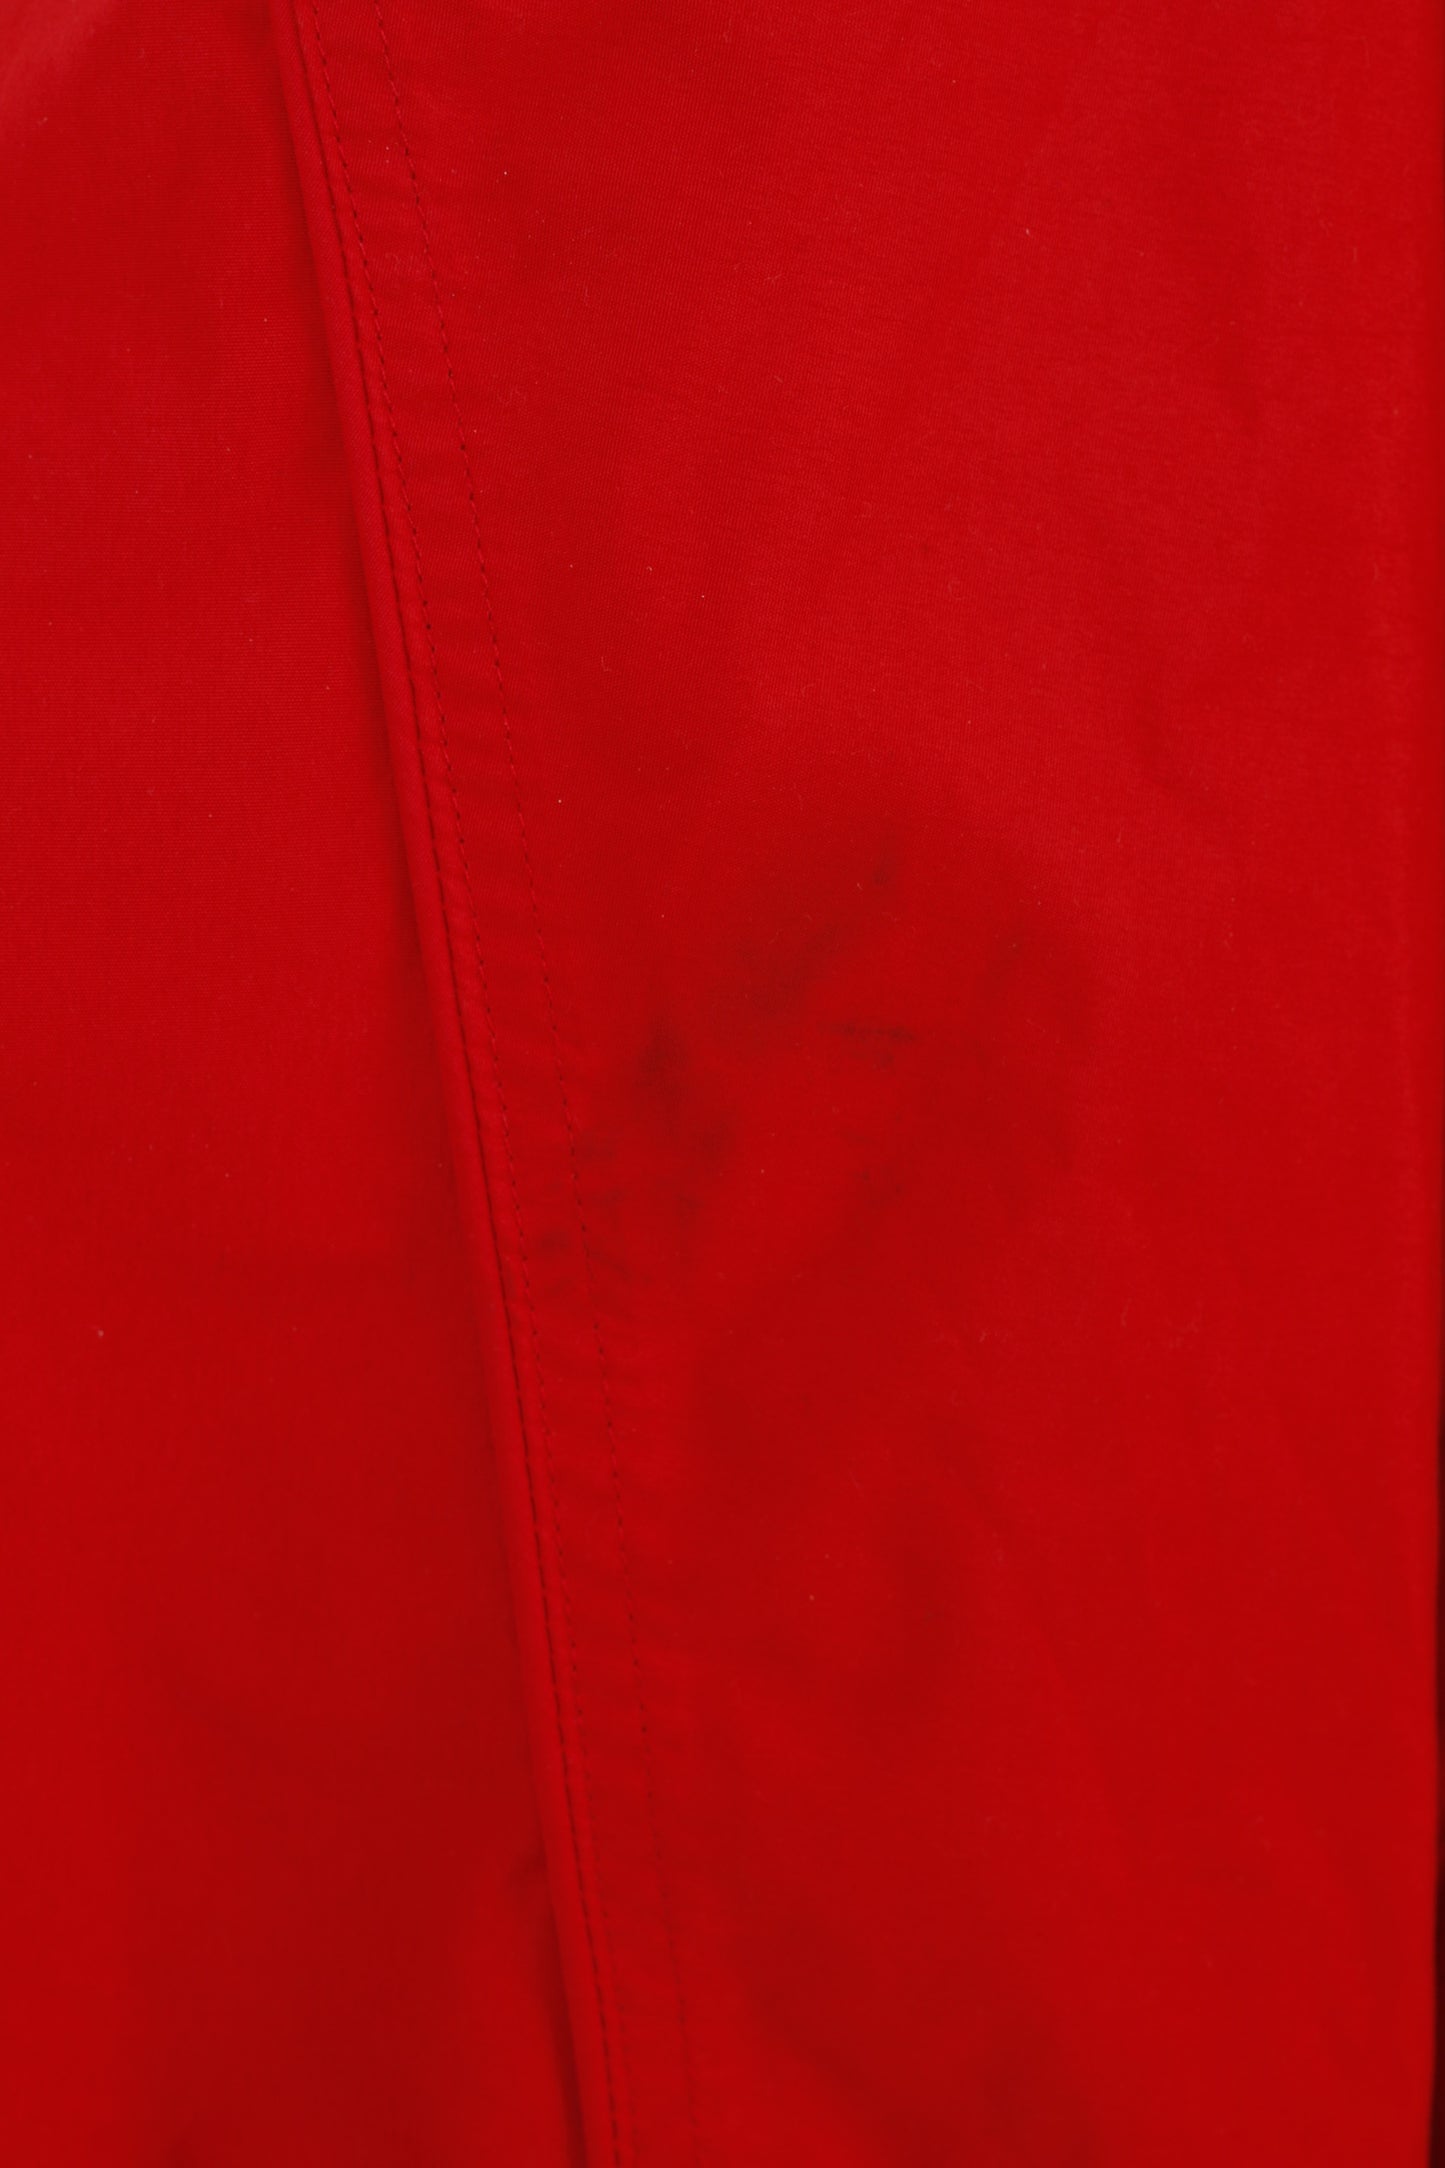 Trespass Woman M Jacket Red Full Zipper Waterproof Pockets Hood Vintage Top